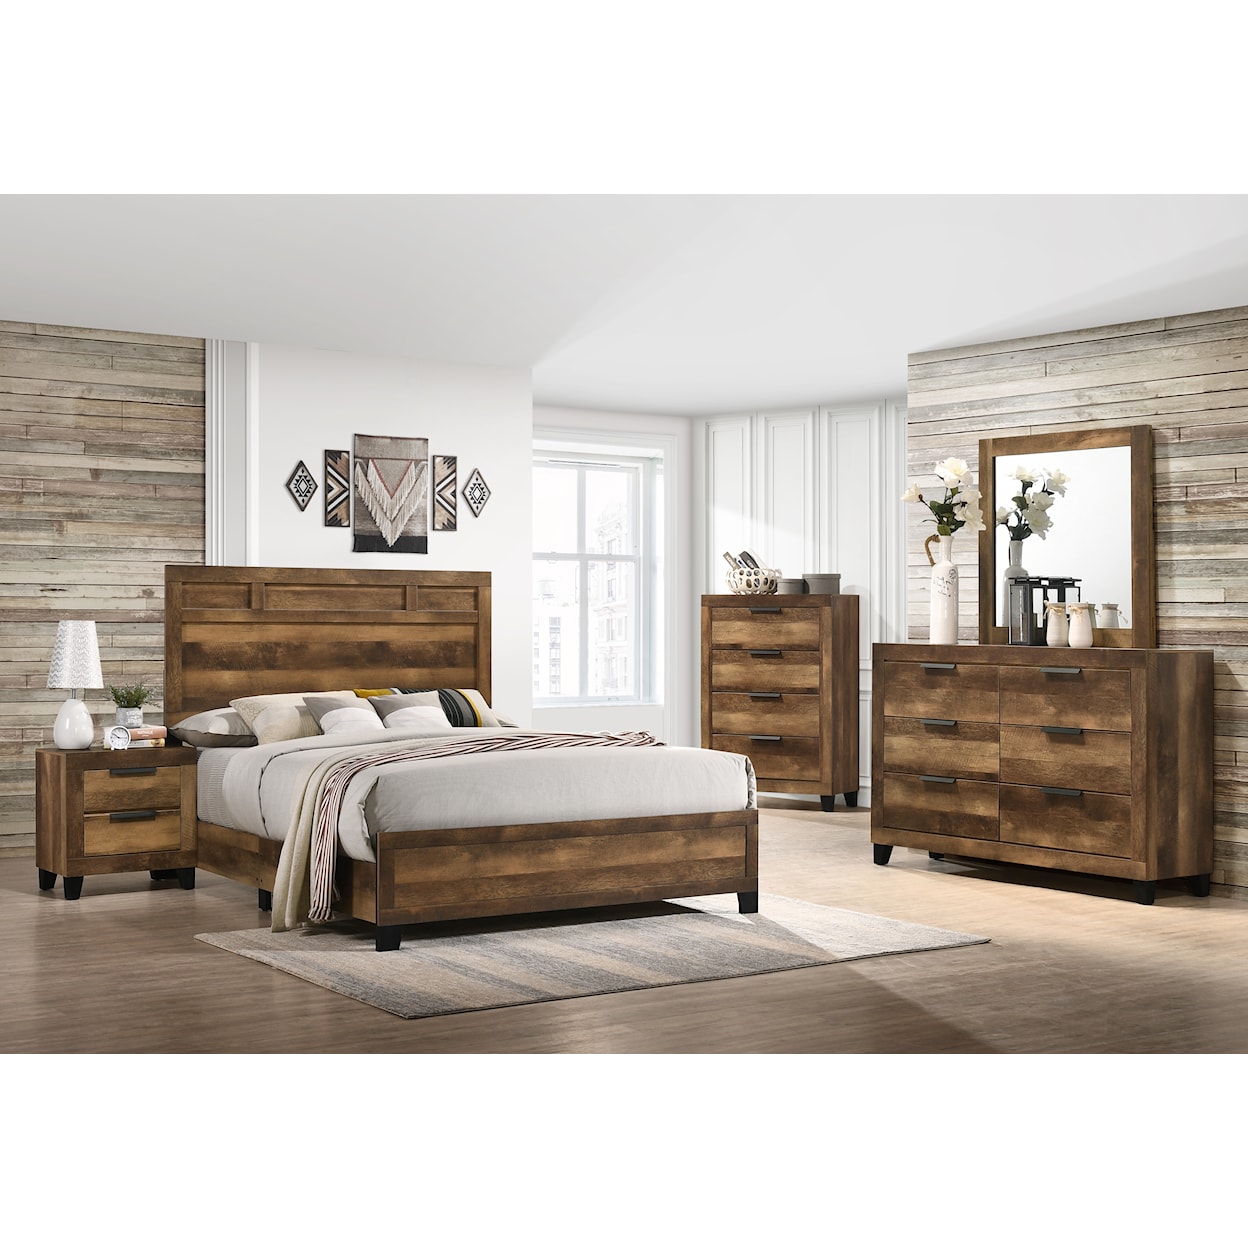 Acme Furniture Morales King Bedroom Group